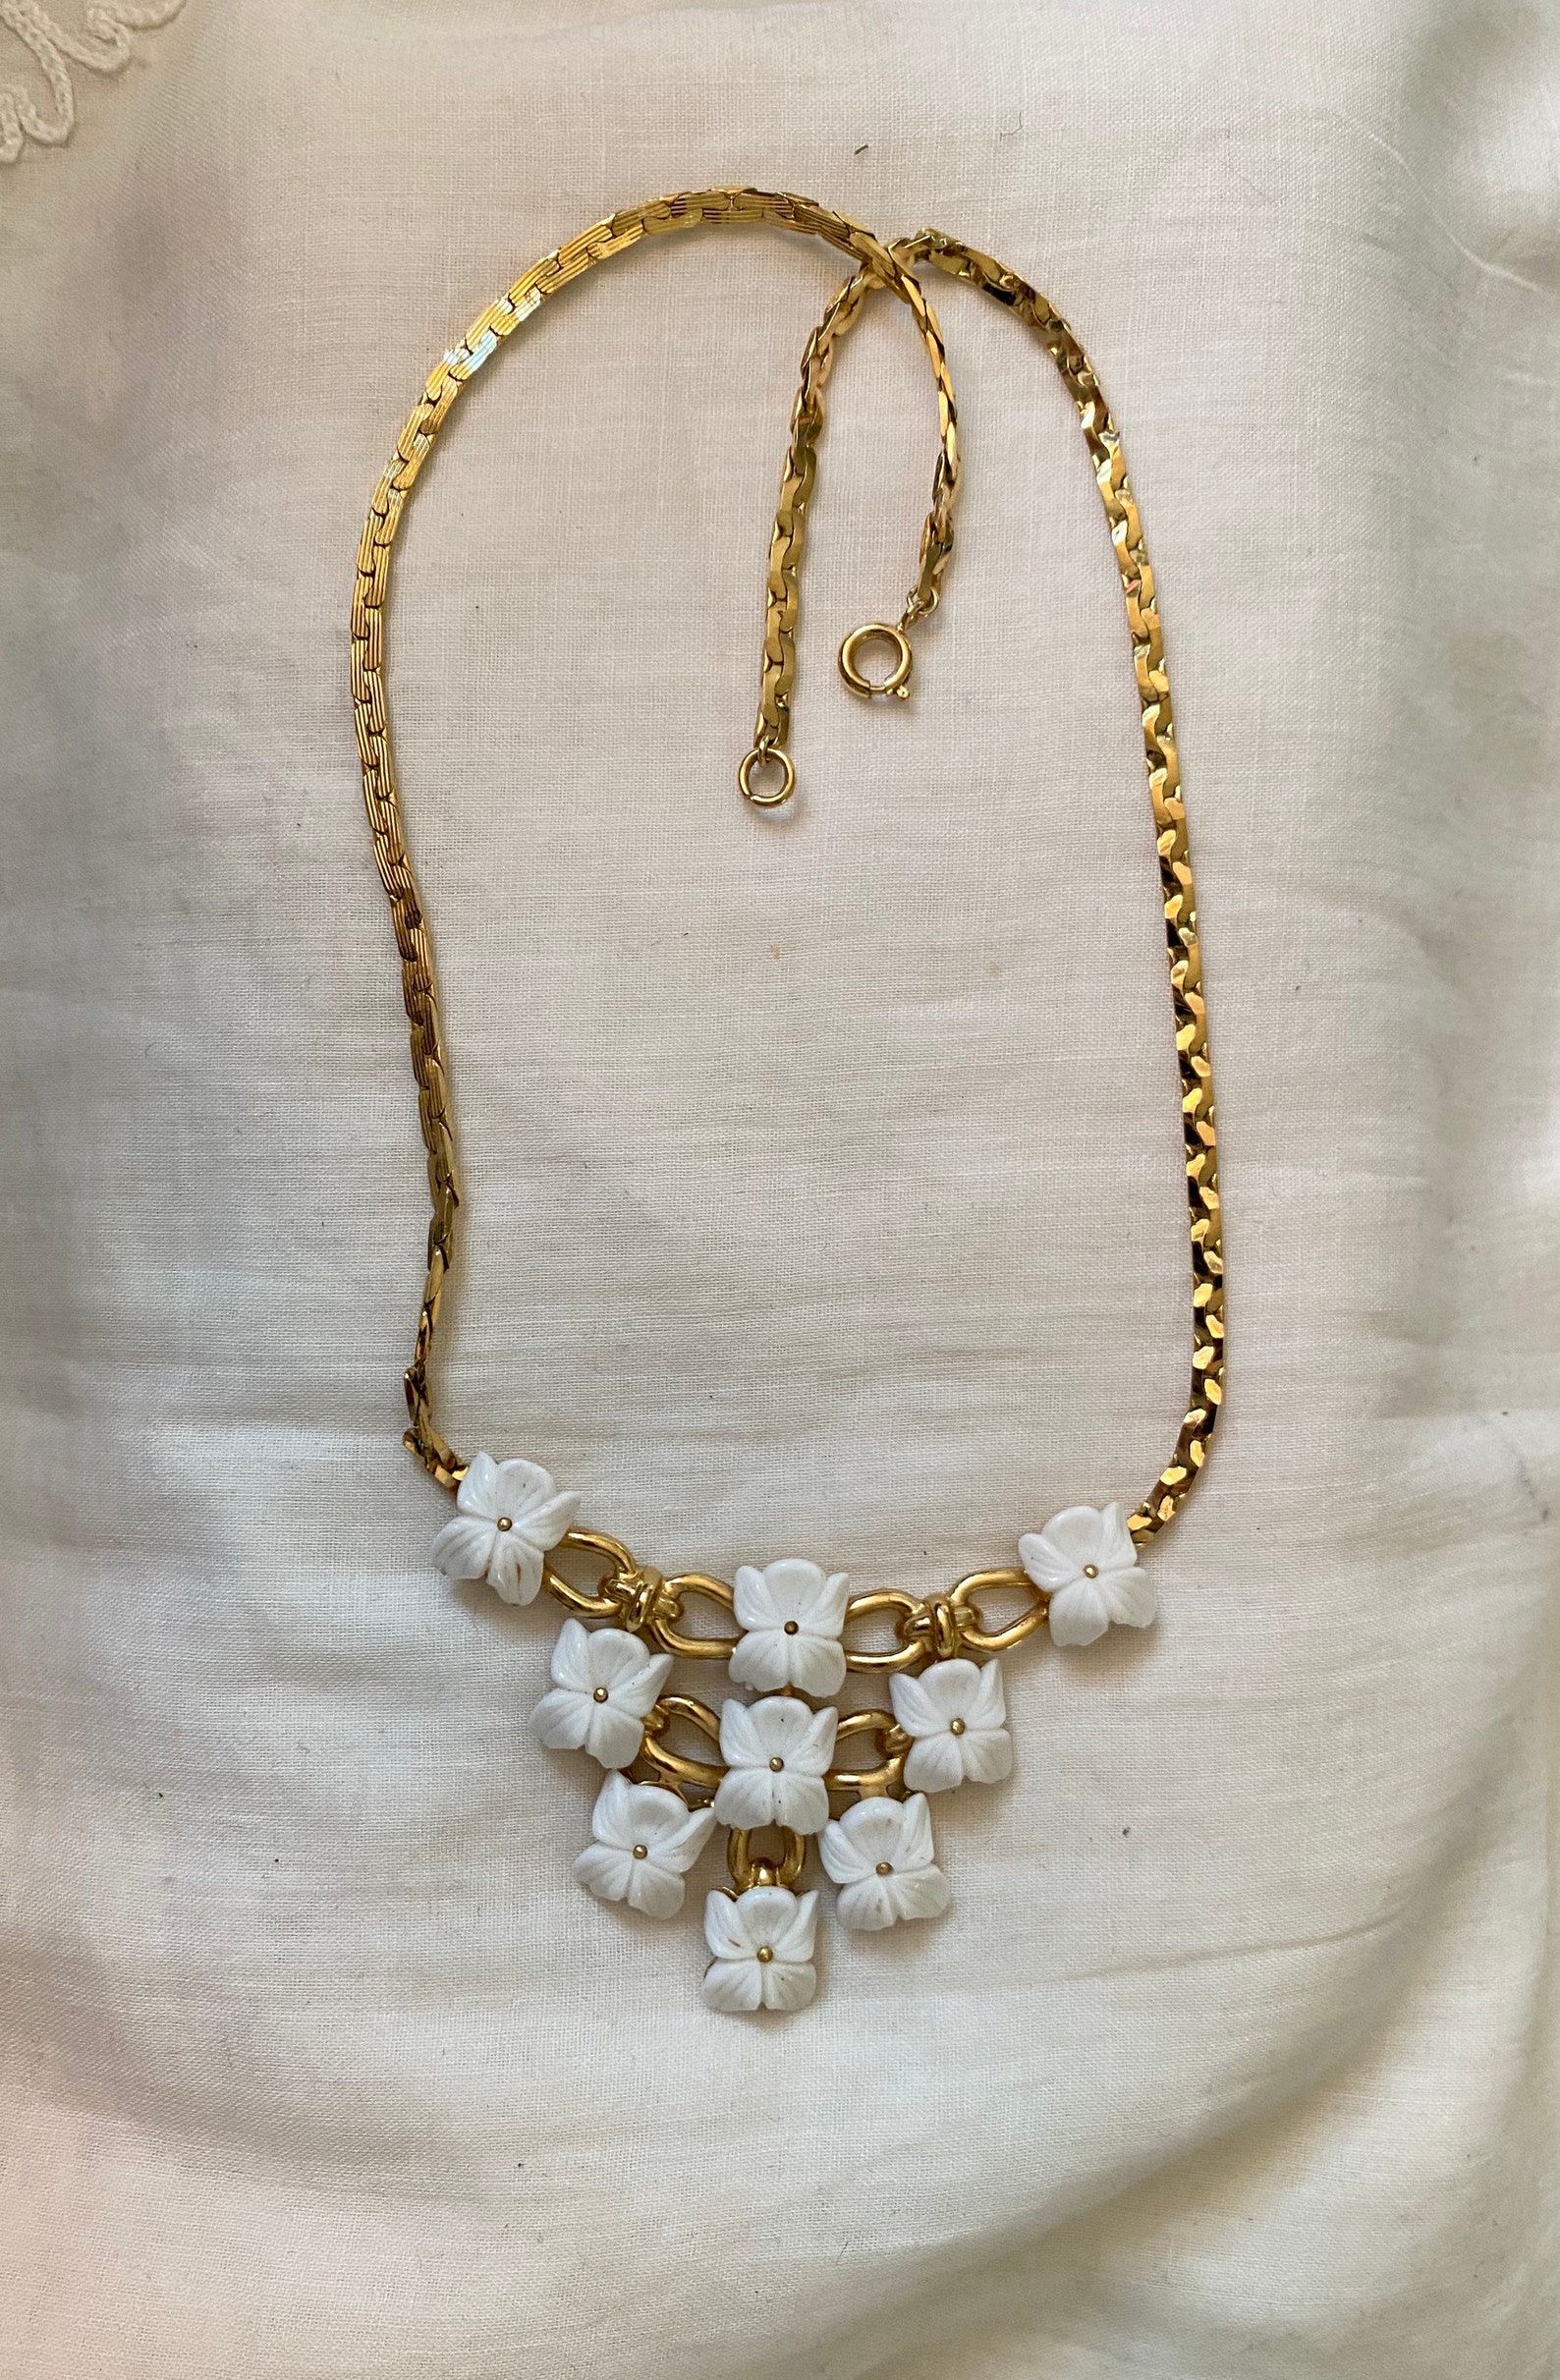 Vintage Trifari Necklace Gold Tone White Flowers | Etsy